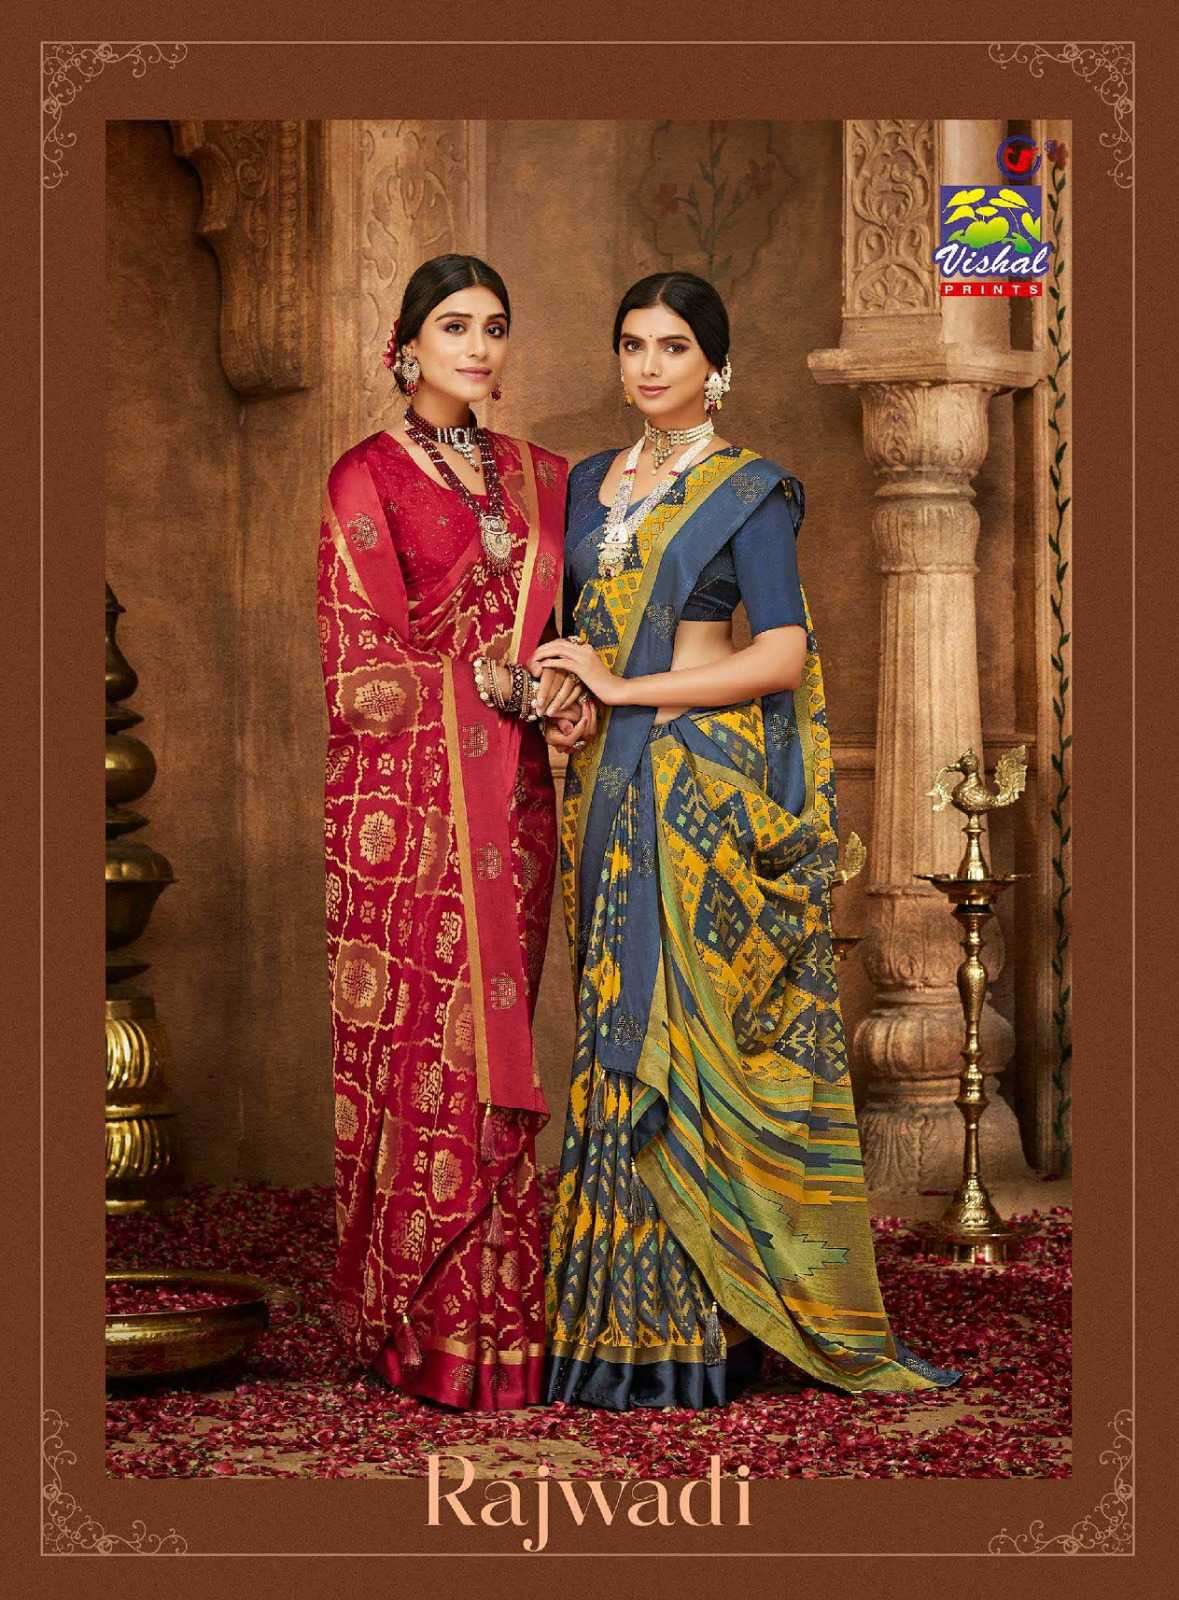 vishal prints rajwadi series 47223-47228 fancy saree